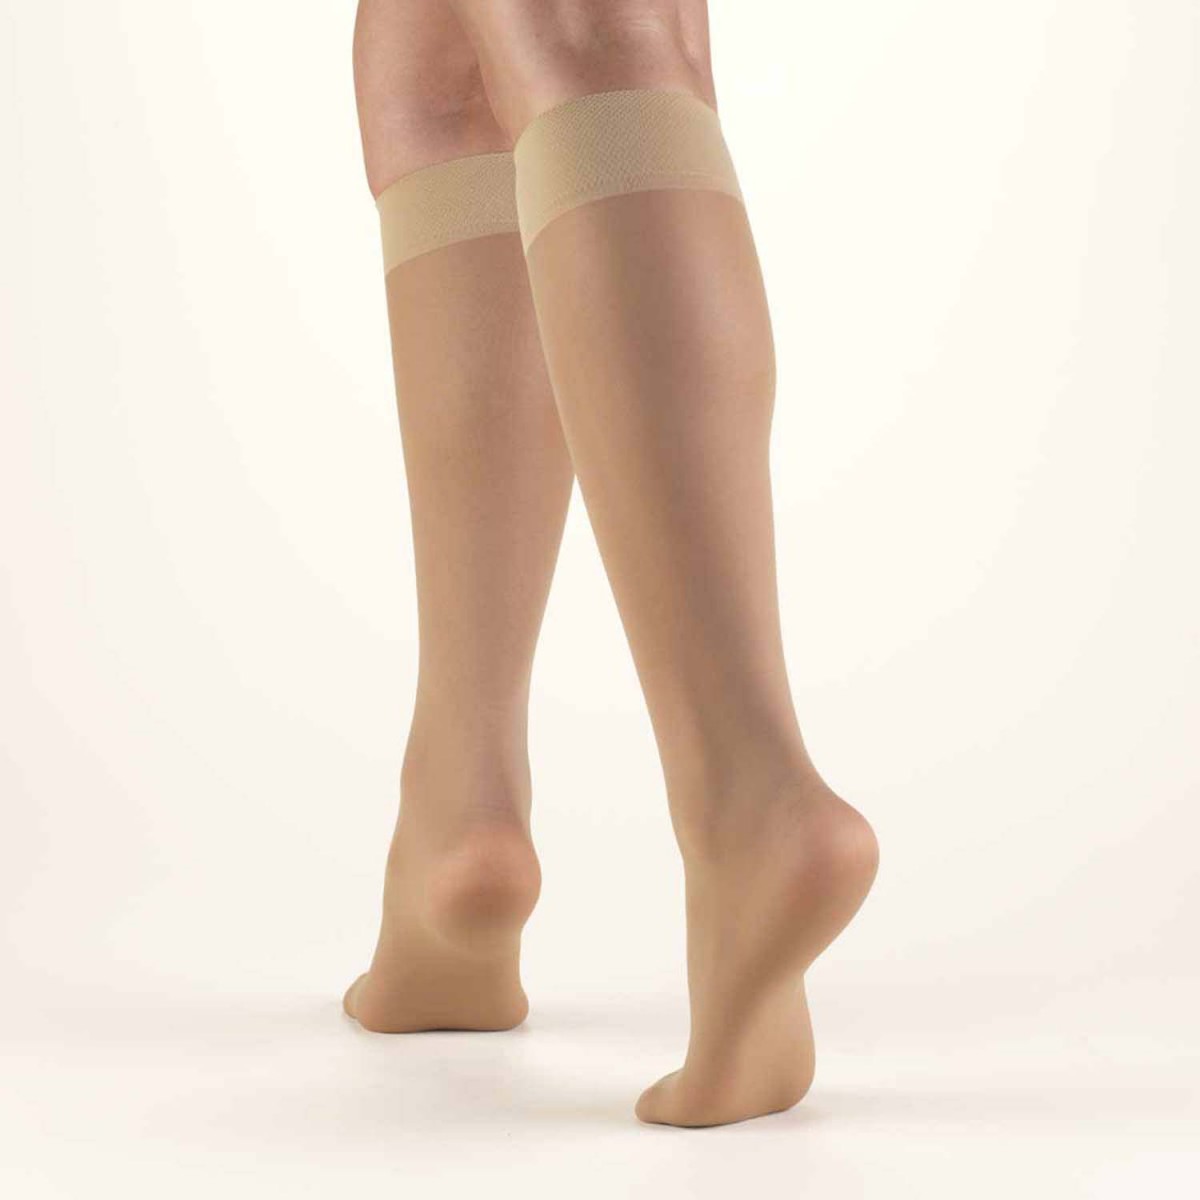 Sanyleg Κάλτσες κάτω γόνατος ελαστικές "Knee High" B11 70 den (12-15 mm/Hg) Μπεζ